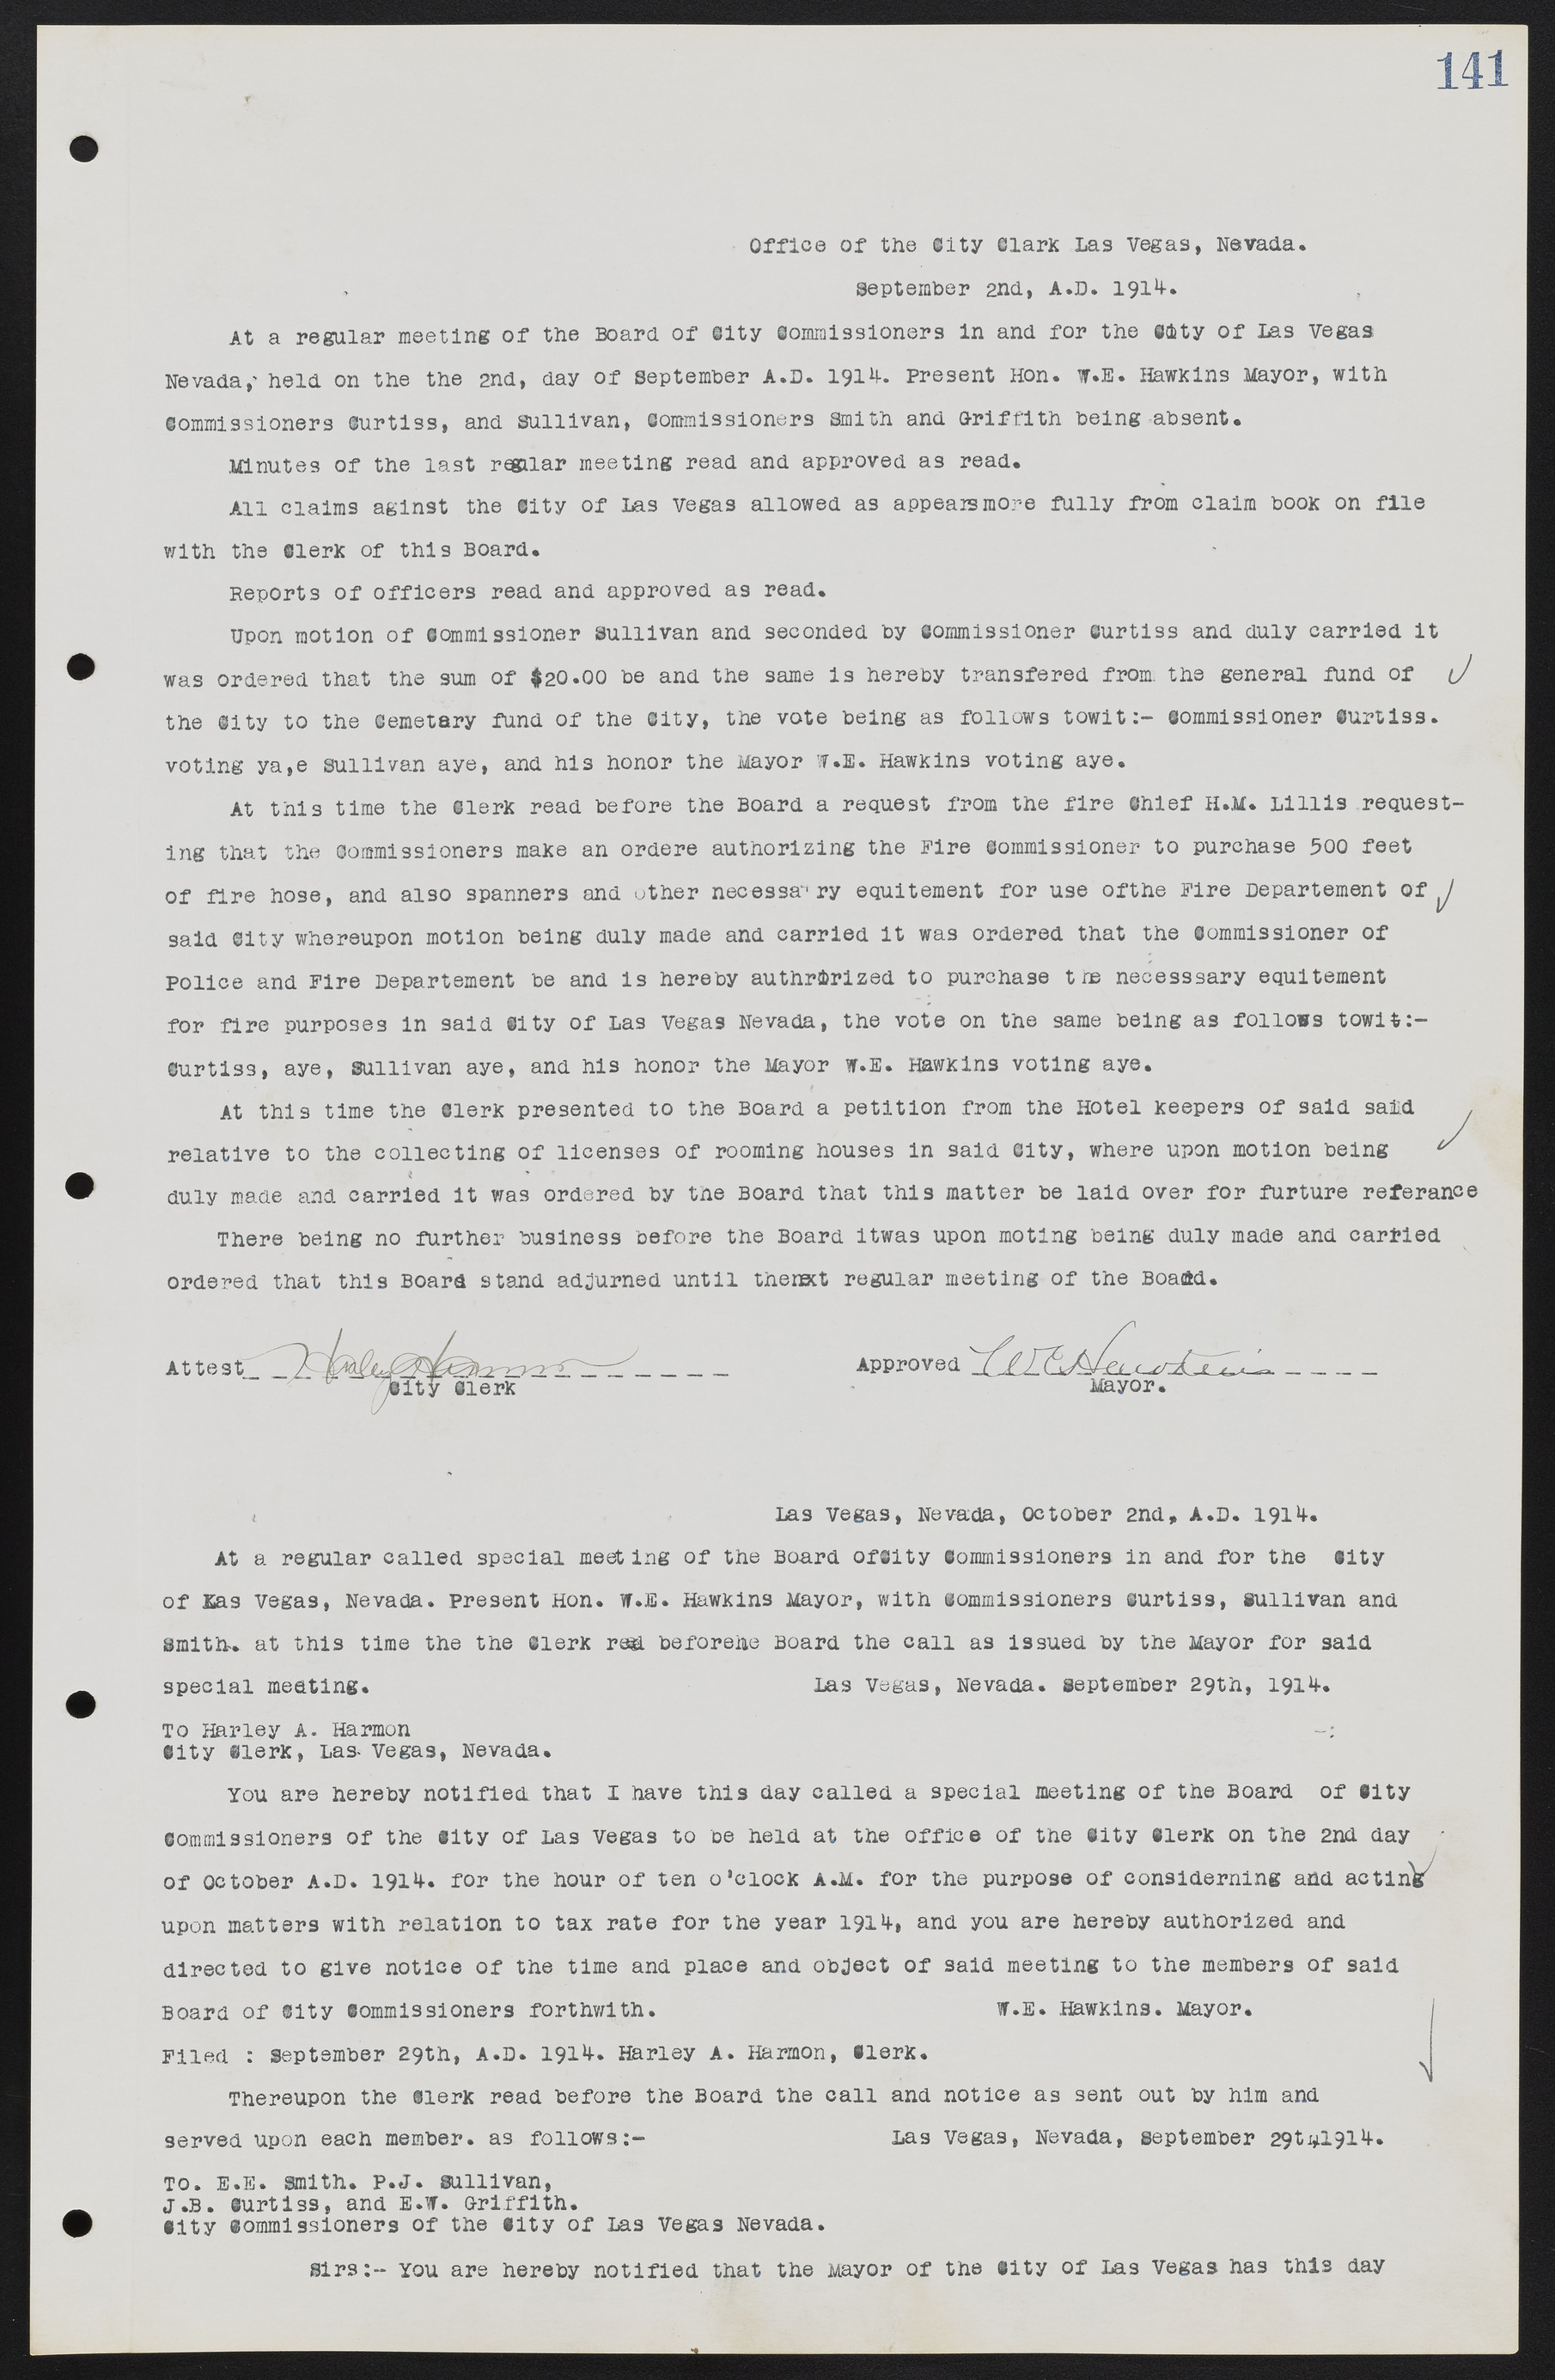 Las Vegas City Commission Minutes, June 22, 1911 to February 7, 1922, lvc000001-155